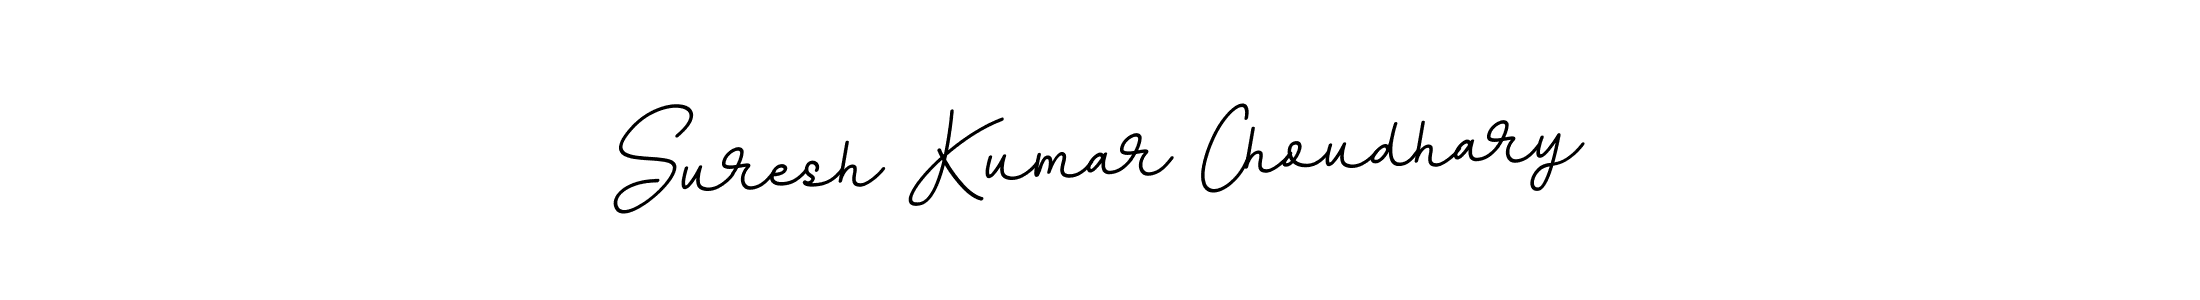 How to Draw Suresh Kumar Choudhary signature style? BallpointsItalic-DORy9 is a latest design signature styles for name Suresh Kumar Choudhary. Suresh Kumar Choudhary signature style 11 images and pictures png